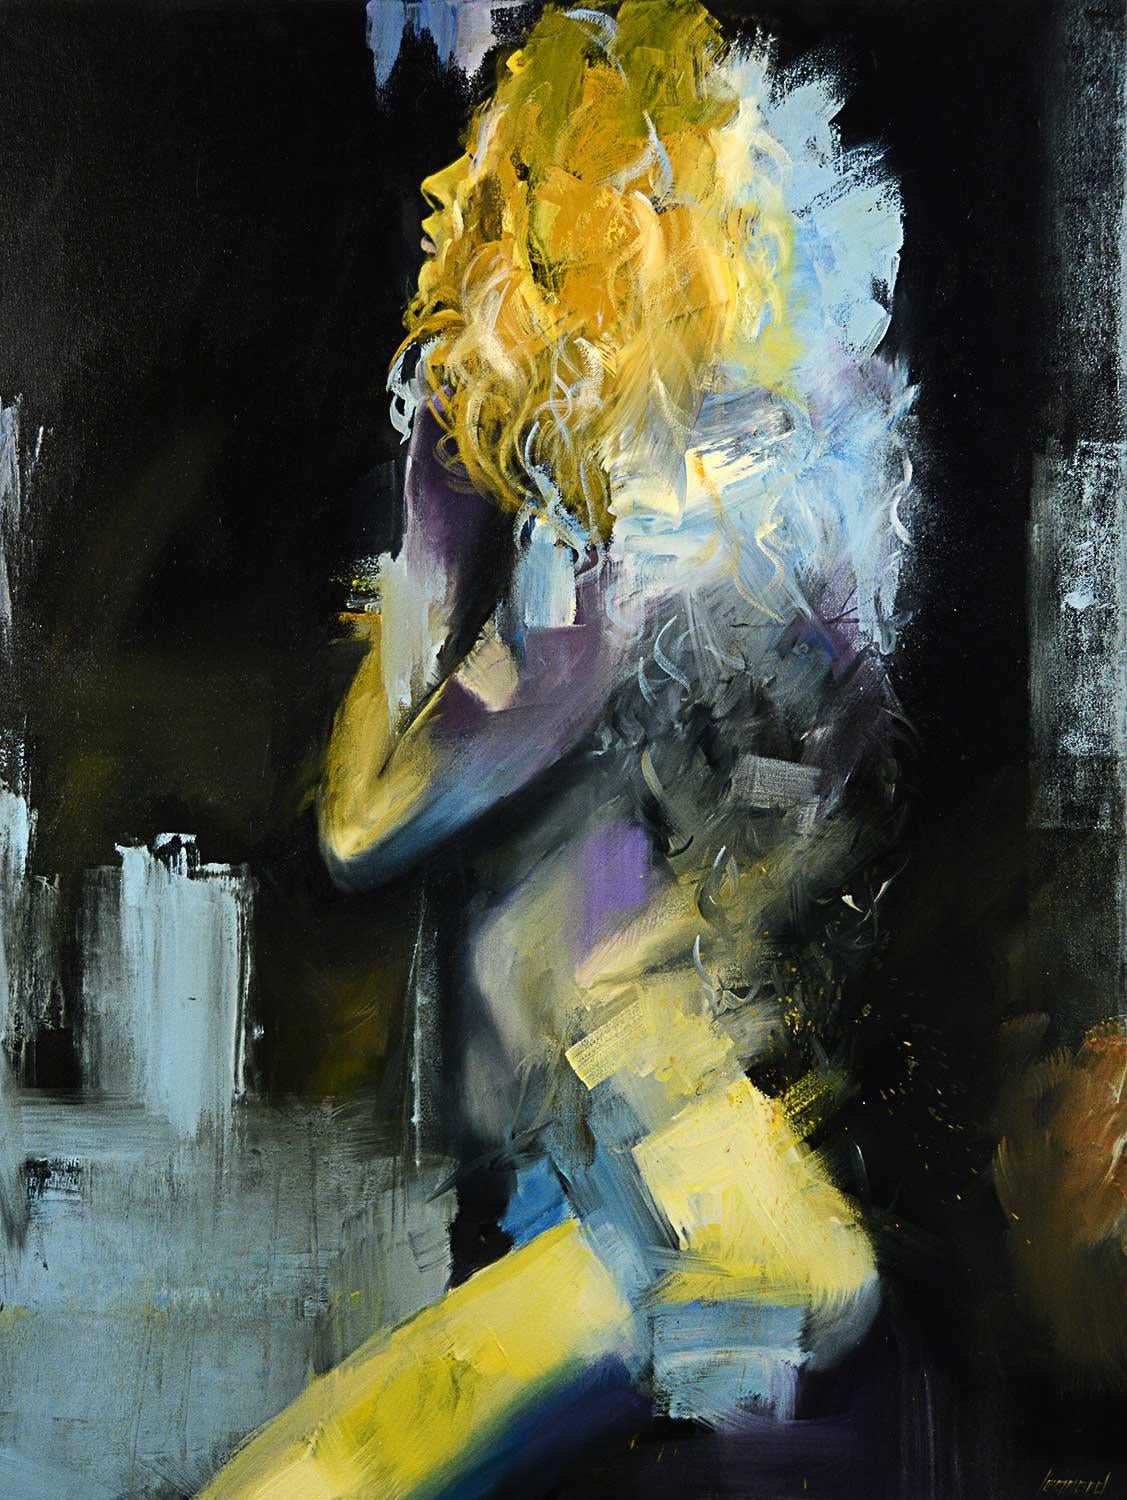 Gary Leonard Nude Painting - Abstract Attitude, Oil Painting